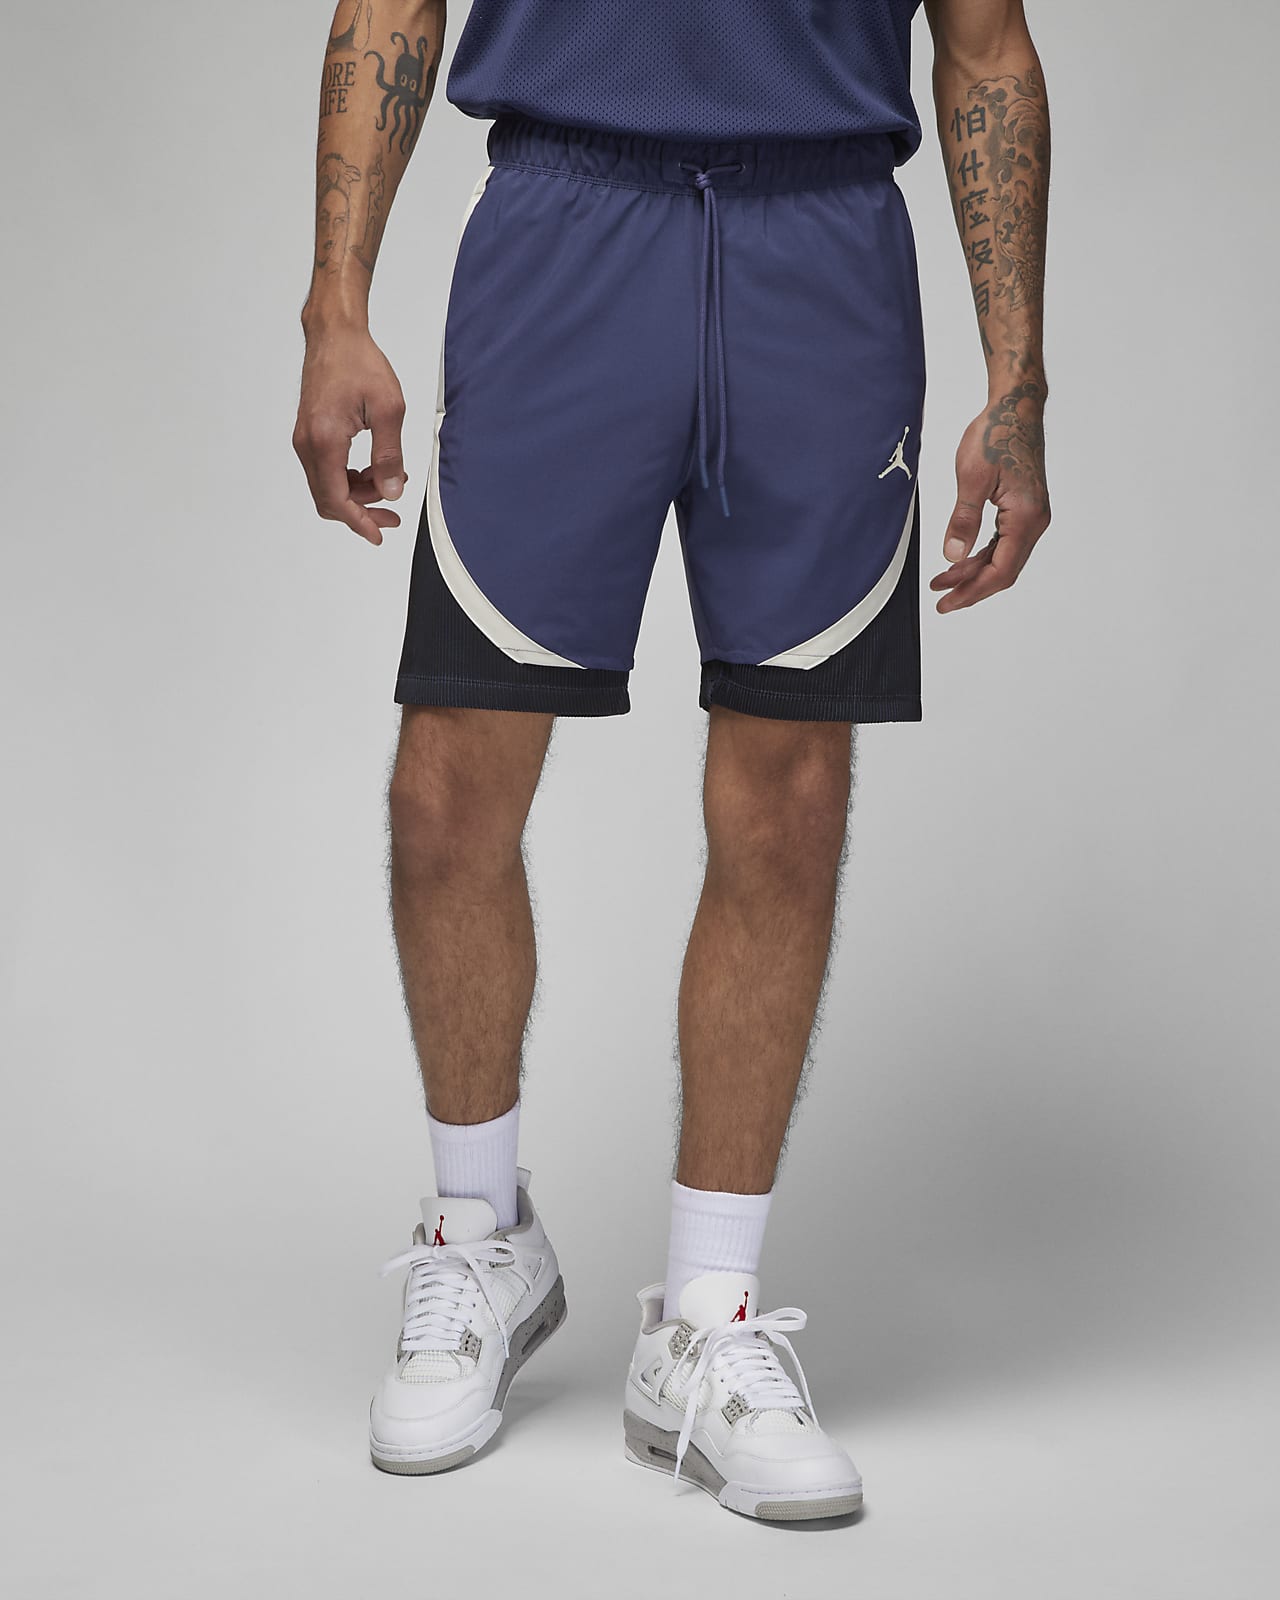 Jordan Dri-FIT Quai 54-shorts til mænd